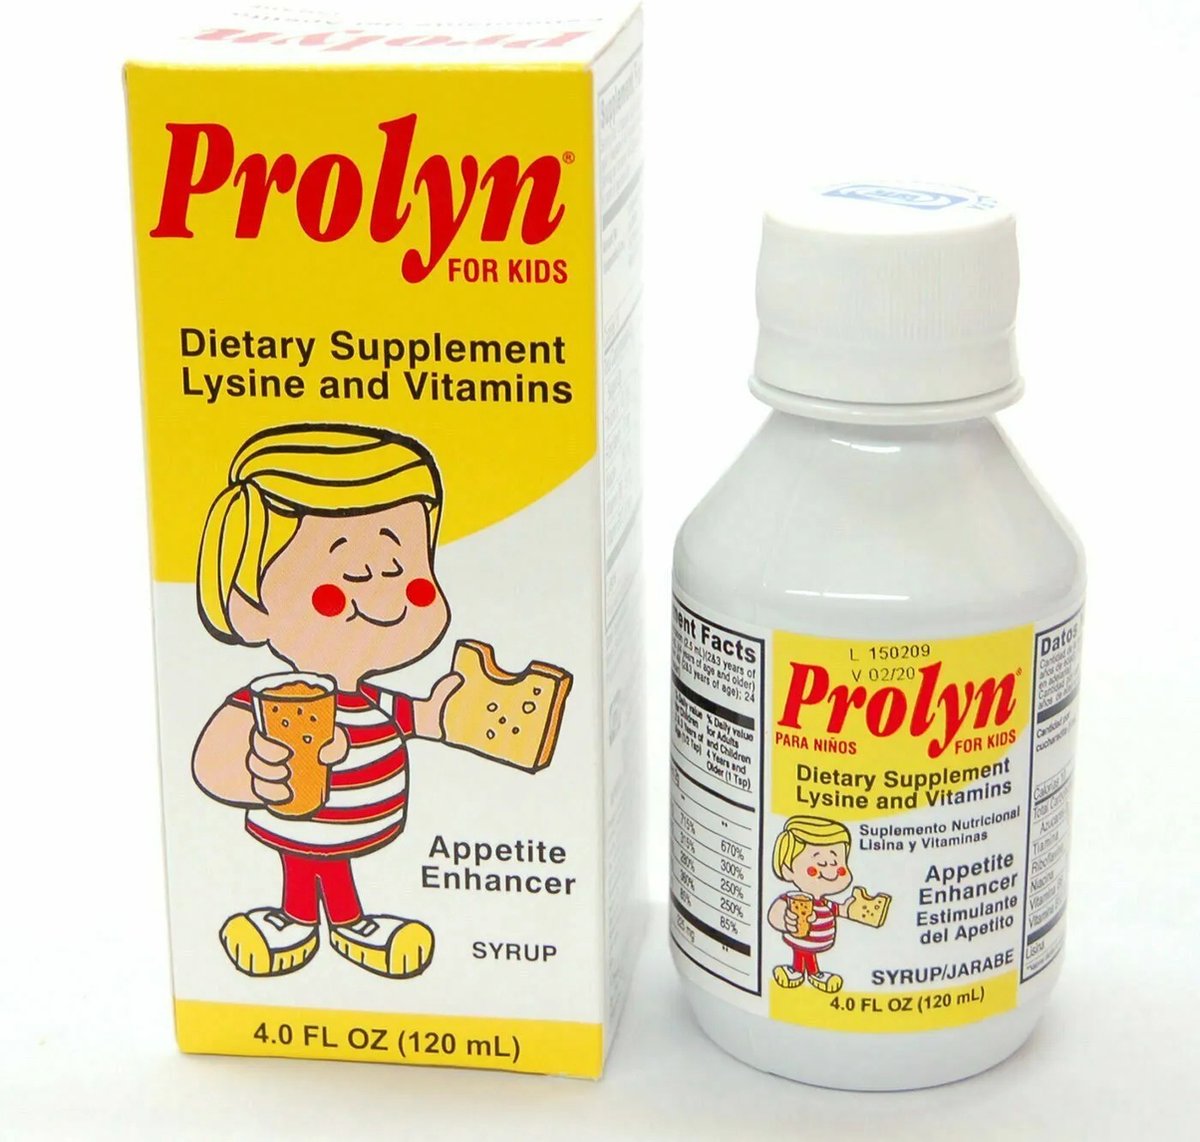 Prolyn Vita Liquid for kids